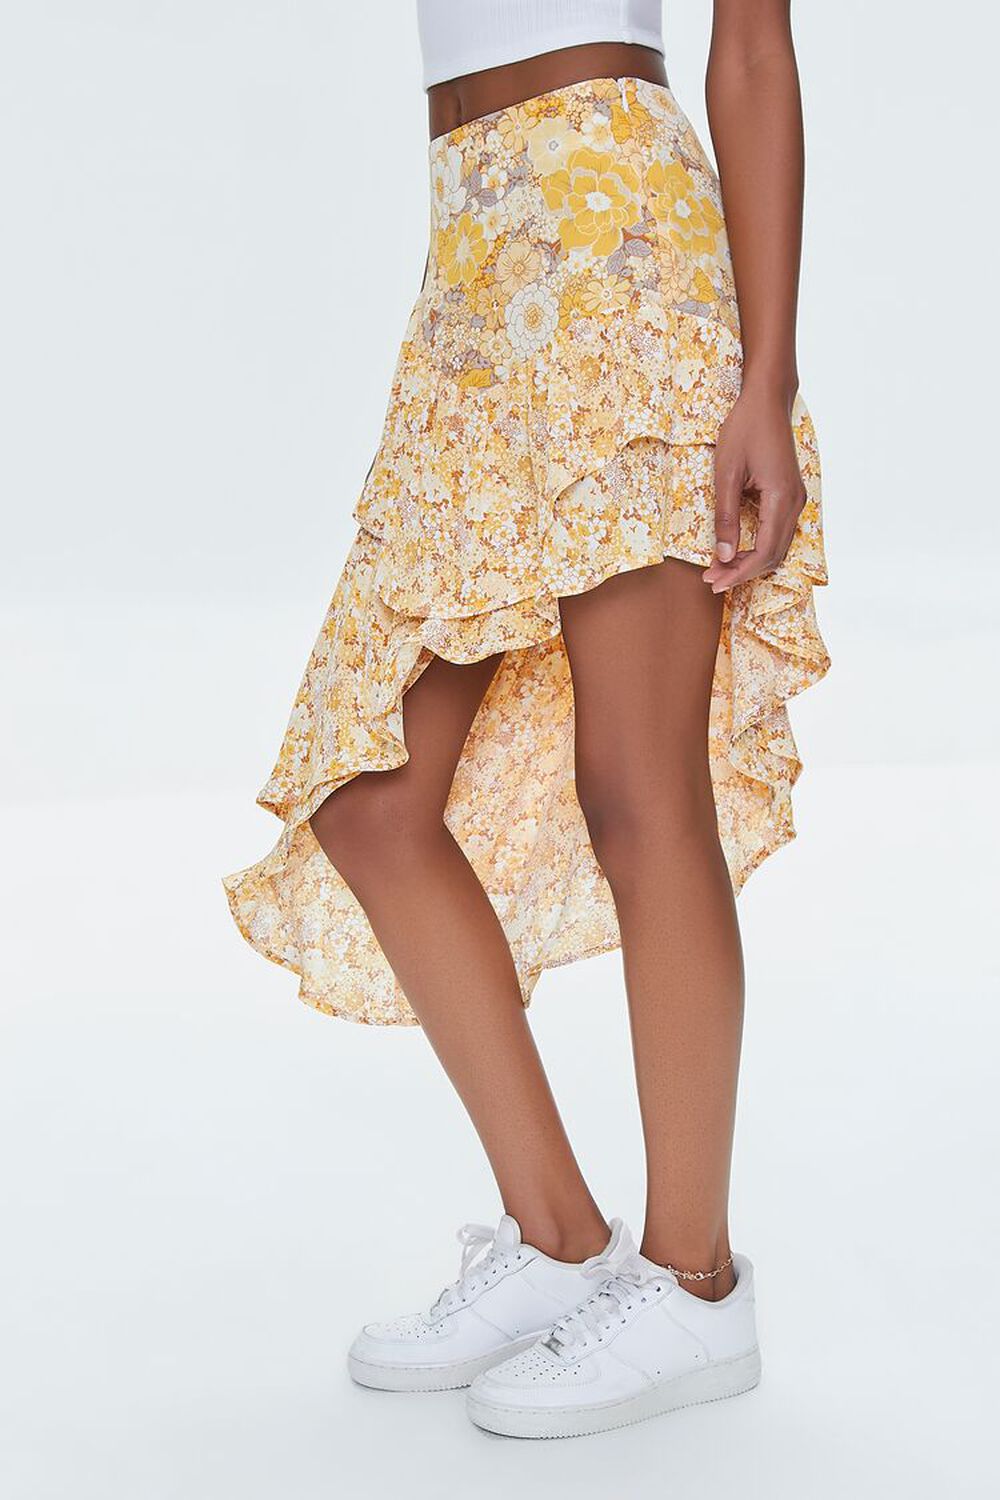 MUSTARD/MULTI Floral Print High-Low Skirt, image 3